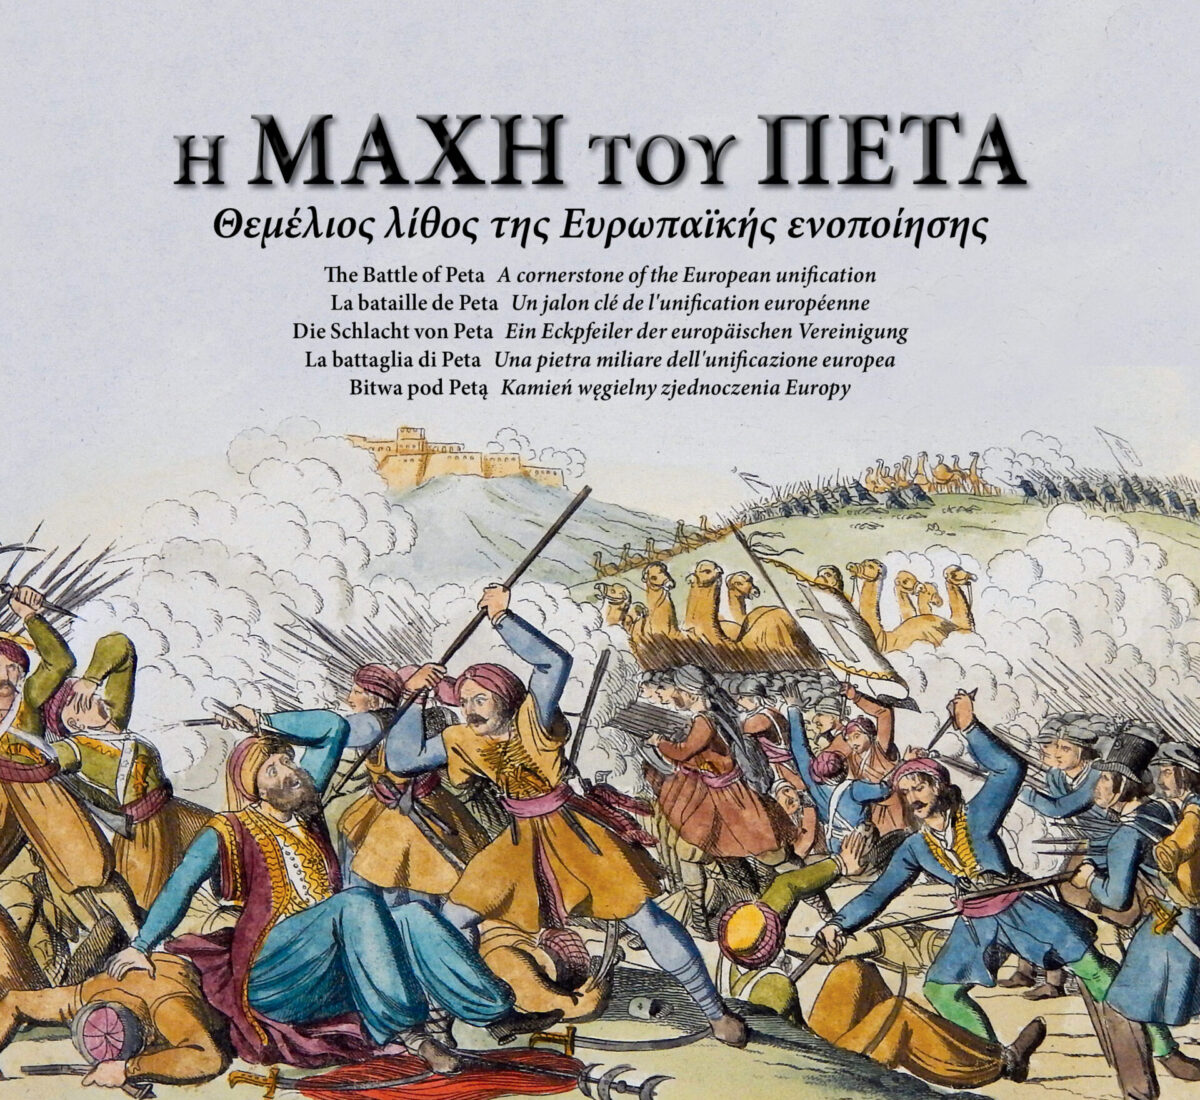 The Battle of Peta. A cornerstone of the European unification